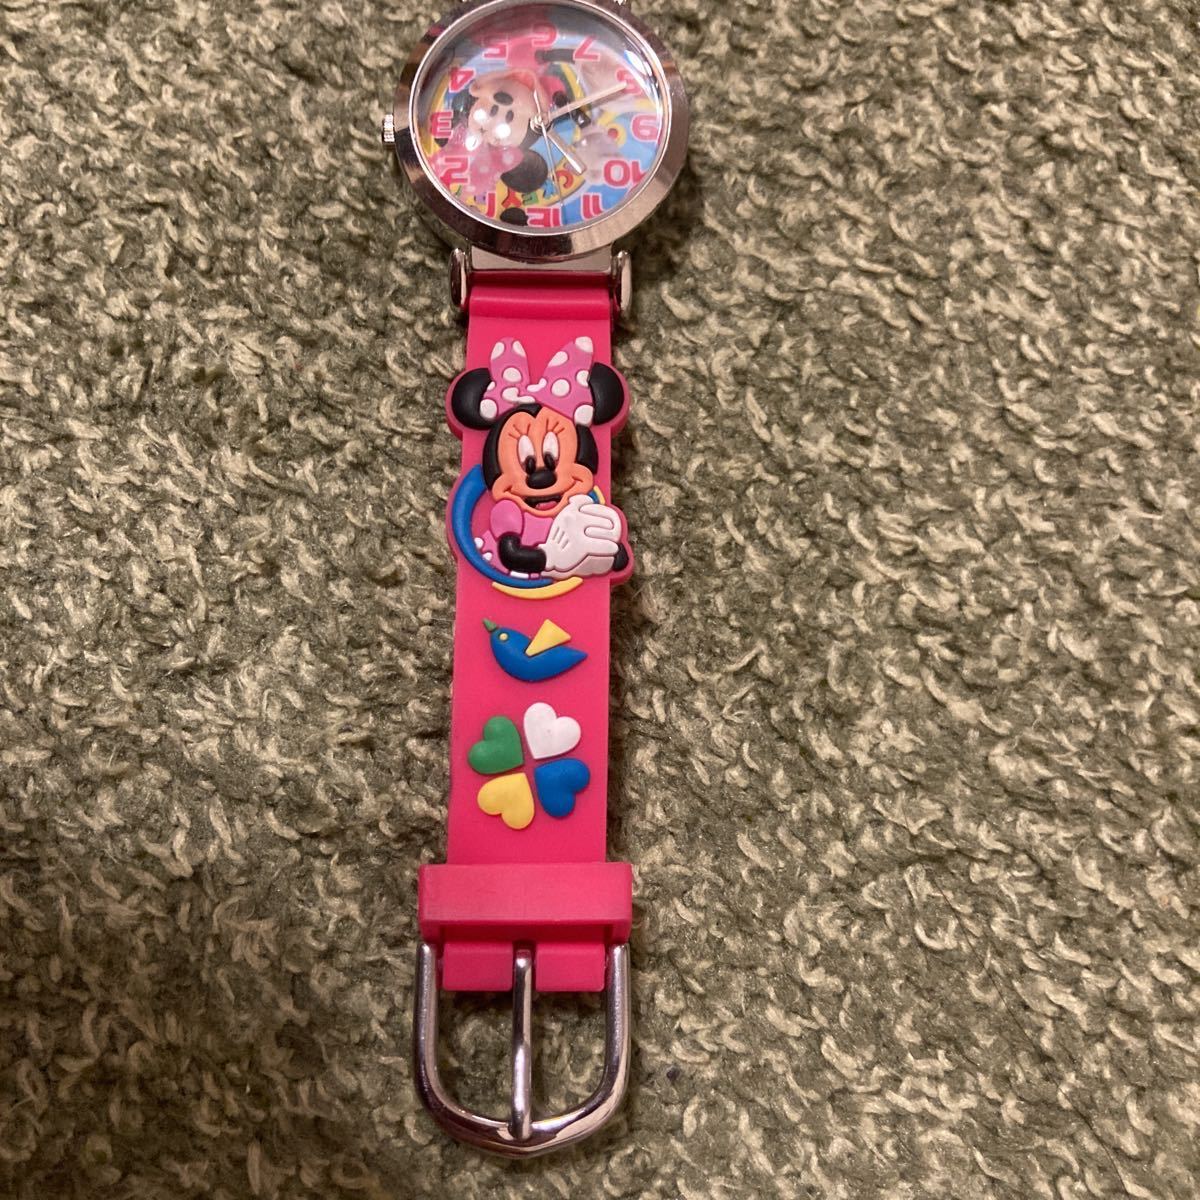  Kids wristwatch Disney Minnie Mouse minnie Chan Disney analogue child clock [ junk ]